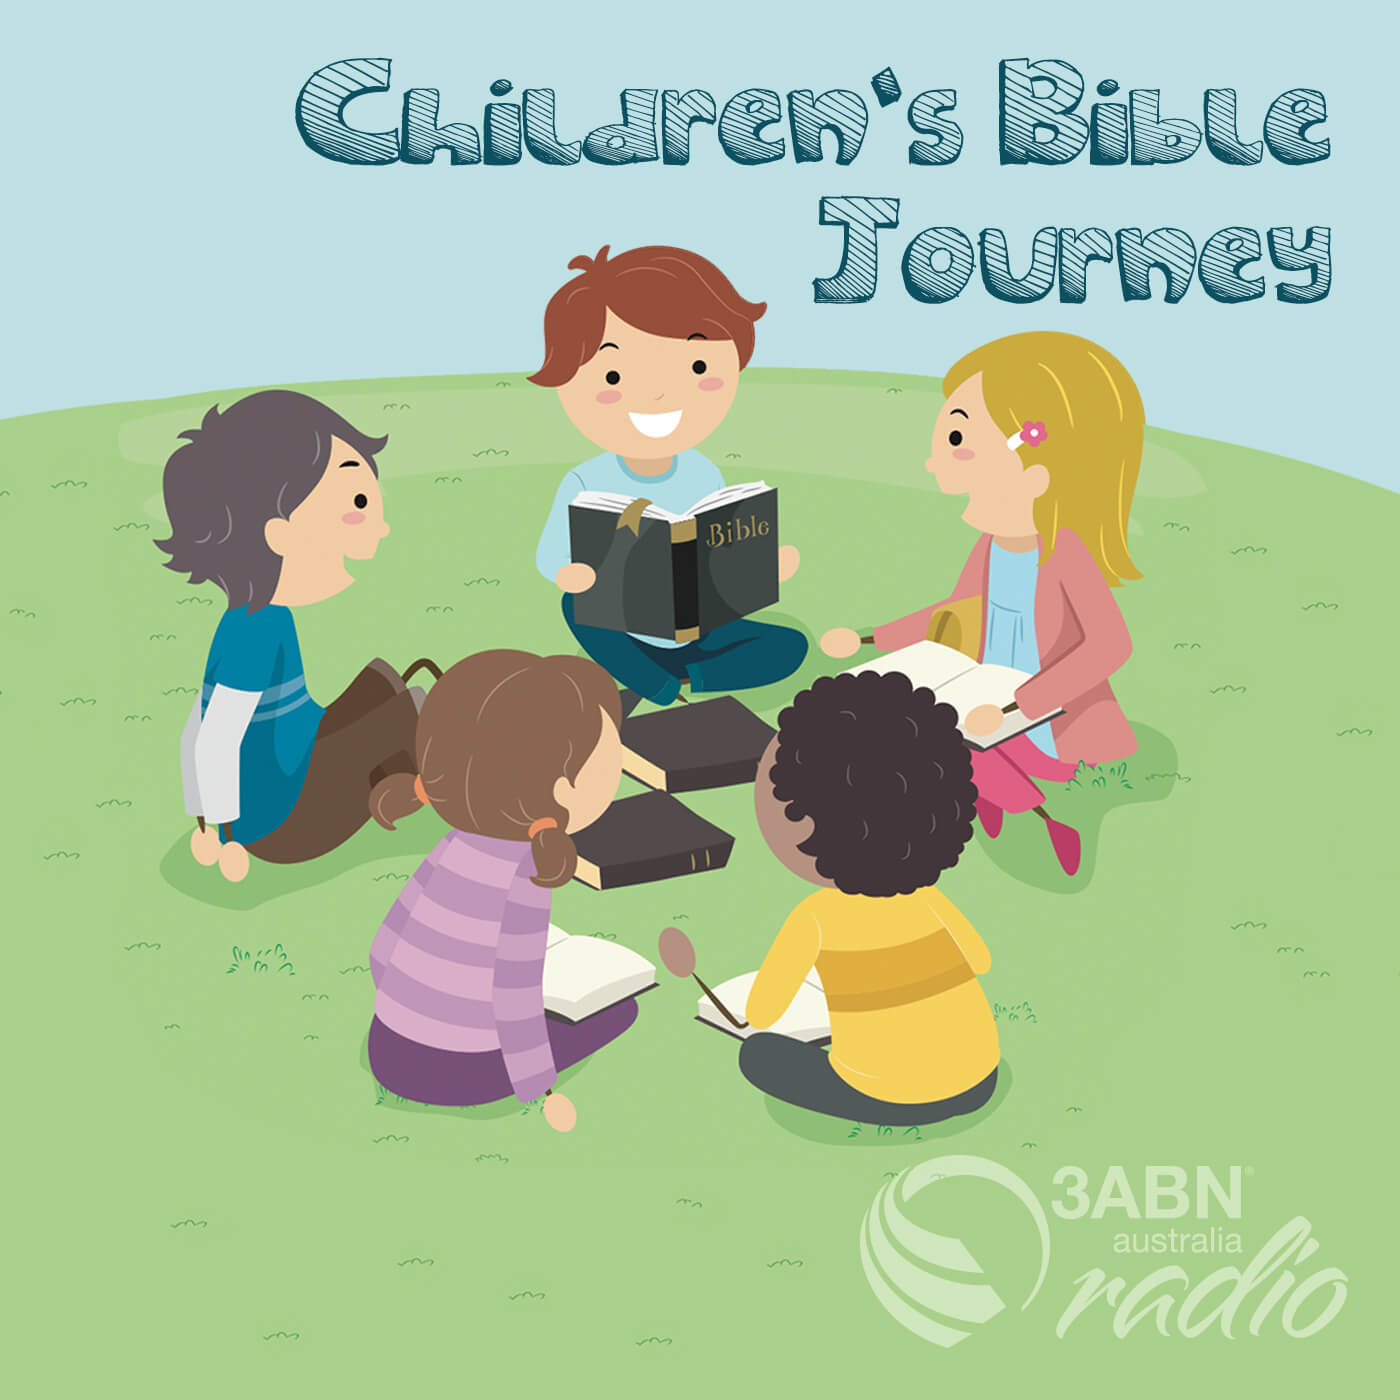 Children's Bible Journey - 2143